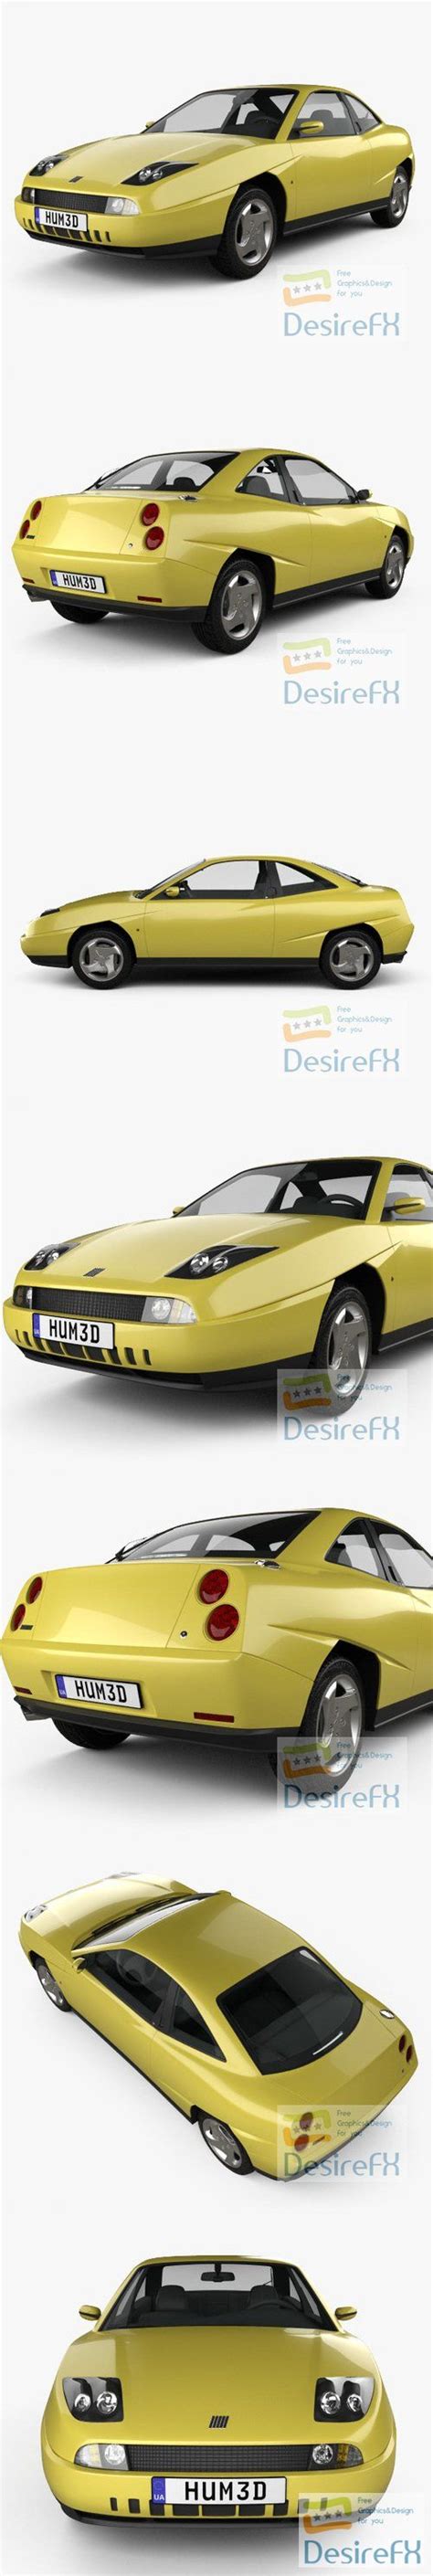 Download Fiat Coupe Pininfarina 1998 3d Model Desirefxcom